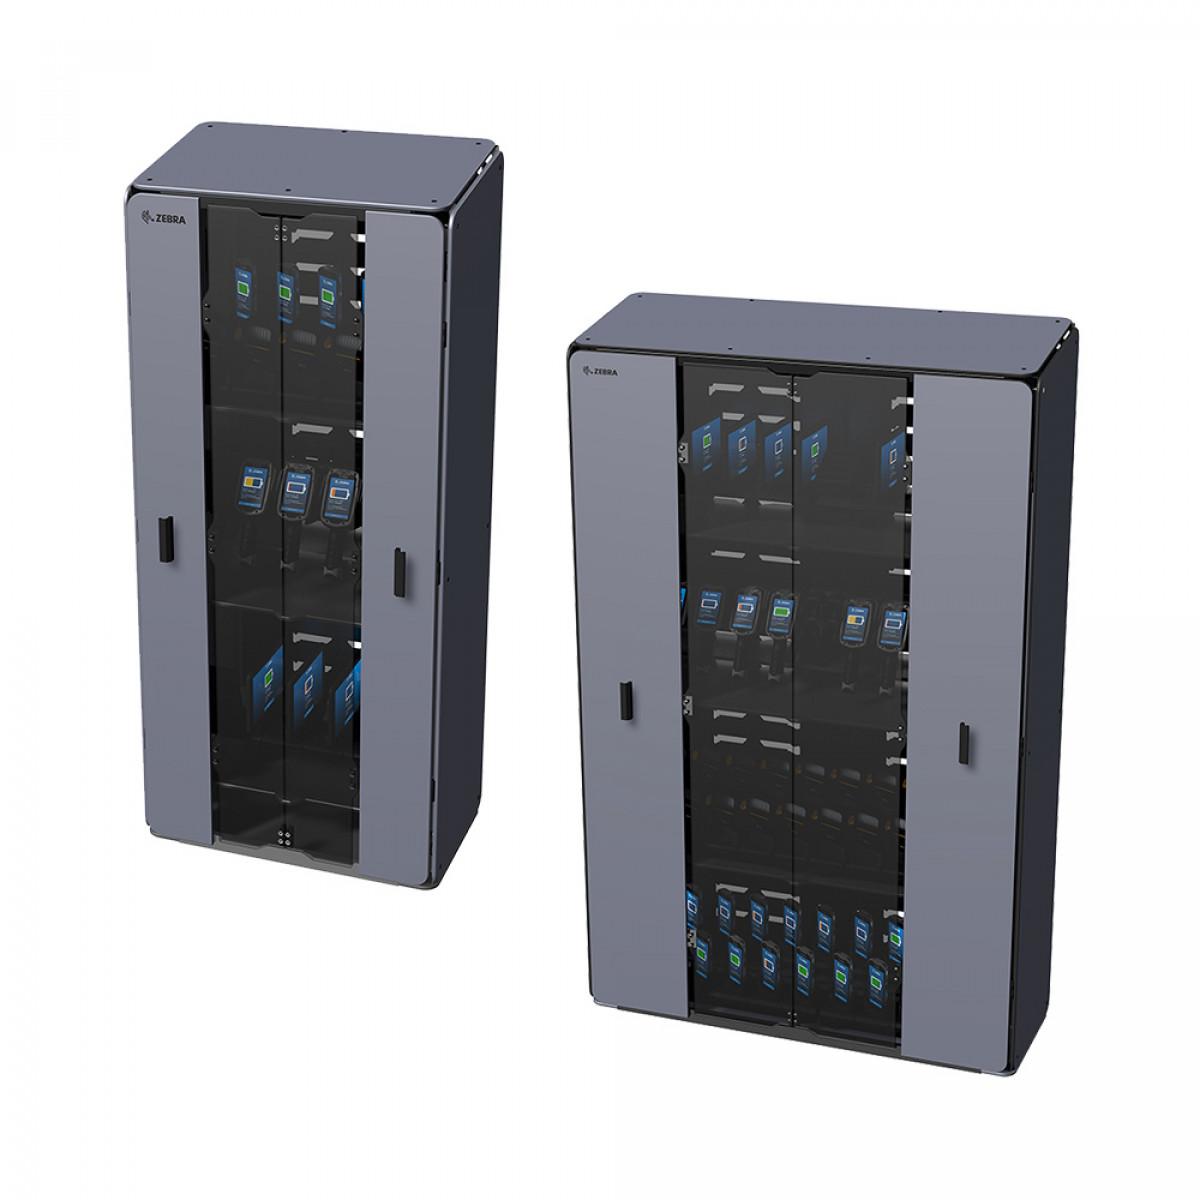 Zebra intelligent cabinet options for mixed data capture hardware